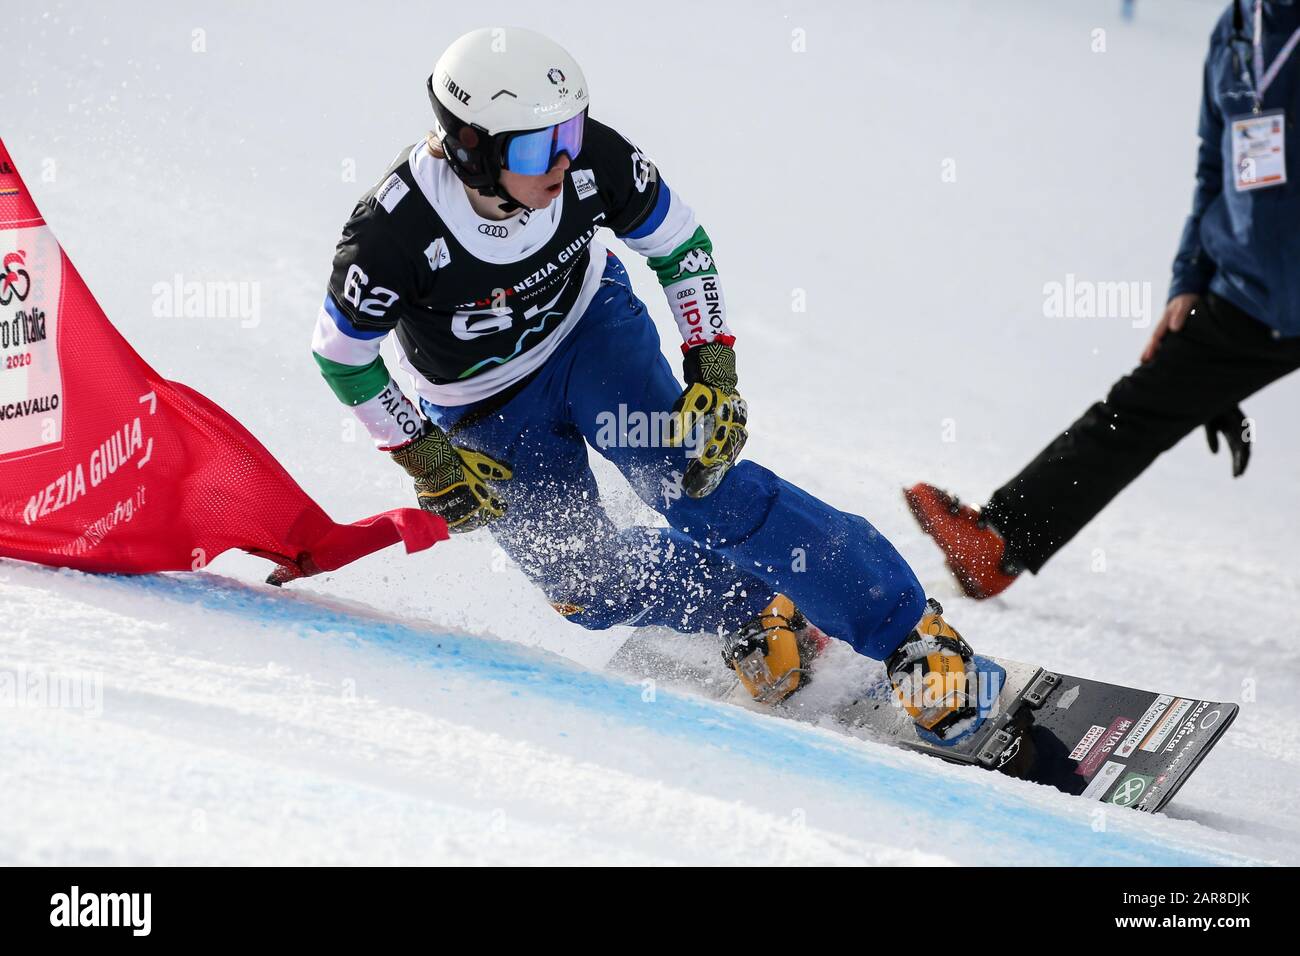 hofer marc ita during FIS Snowboard World Cup - Parallel Slalom PSL,  Piancavallo - Aviano (PN), Italy, 25 Jan 2020, Winter Sports Snowboard  Stock Photo - Alamy